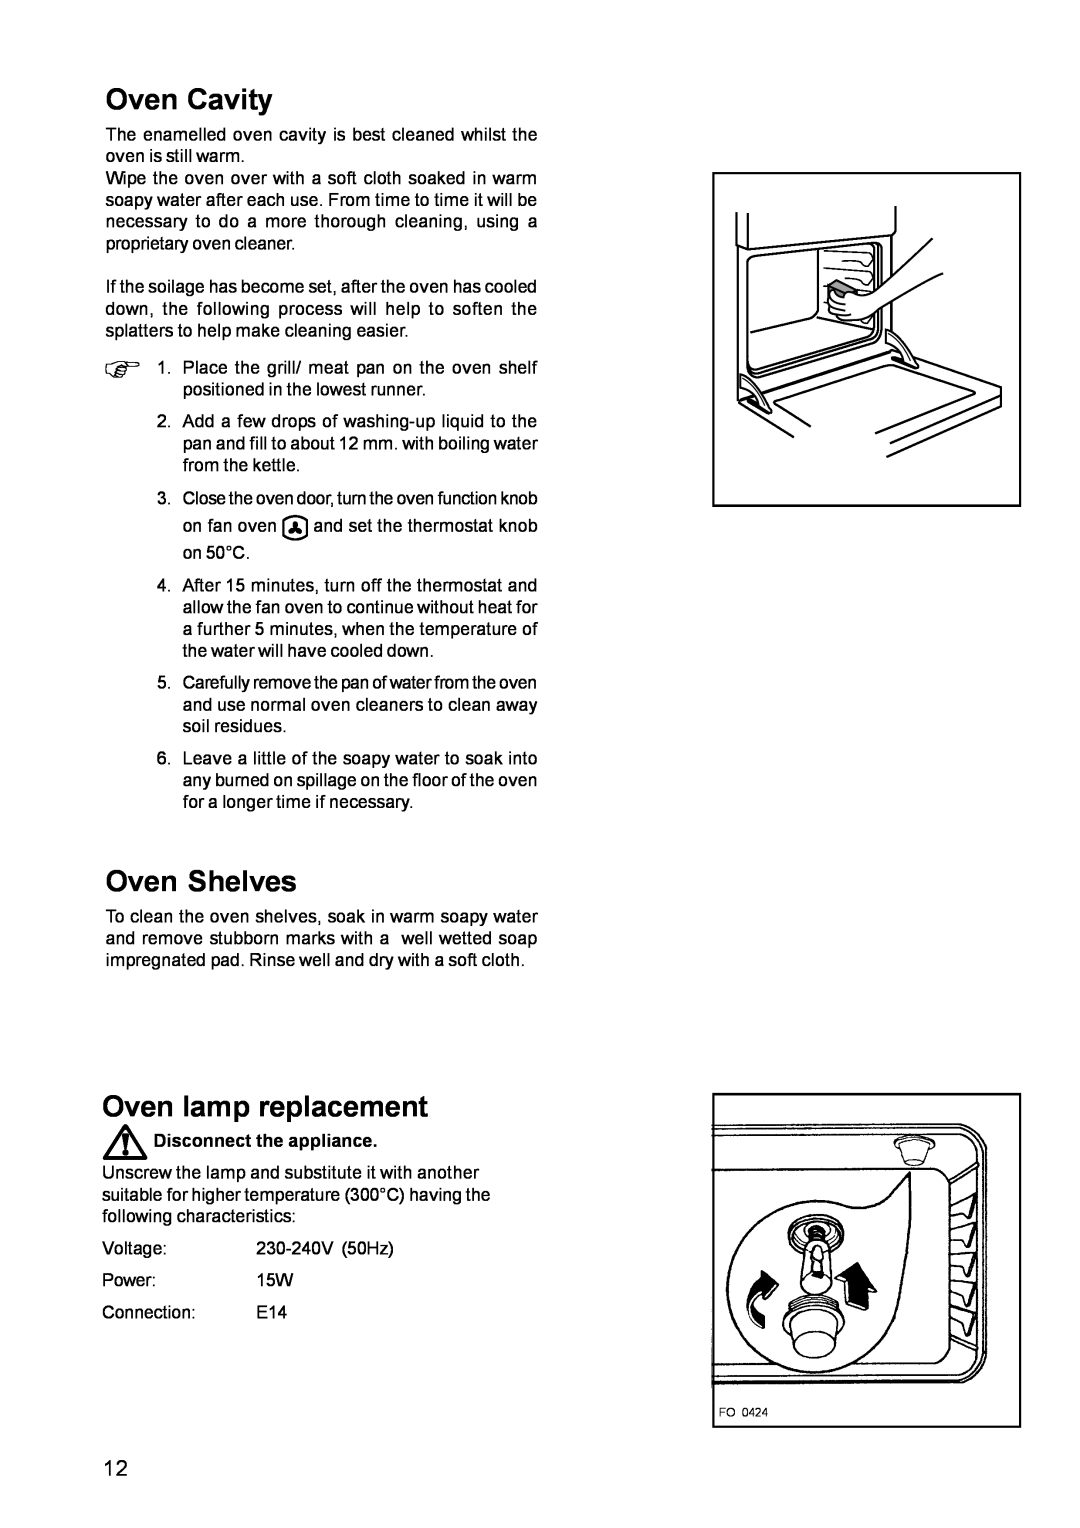 Parkinson Cowan CSIM 509 manual Oven Cavity, Oven Shelves, Oven lamp replacement 